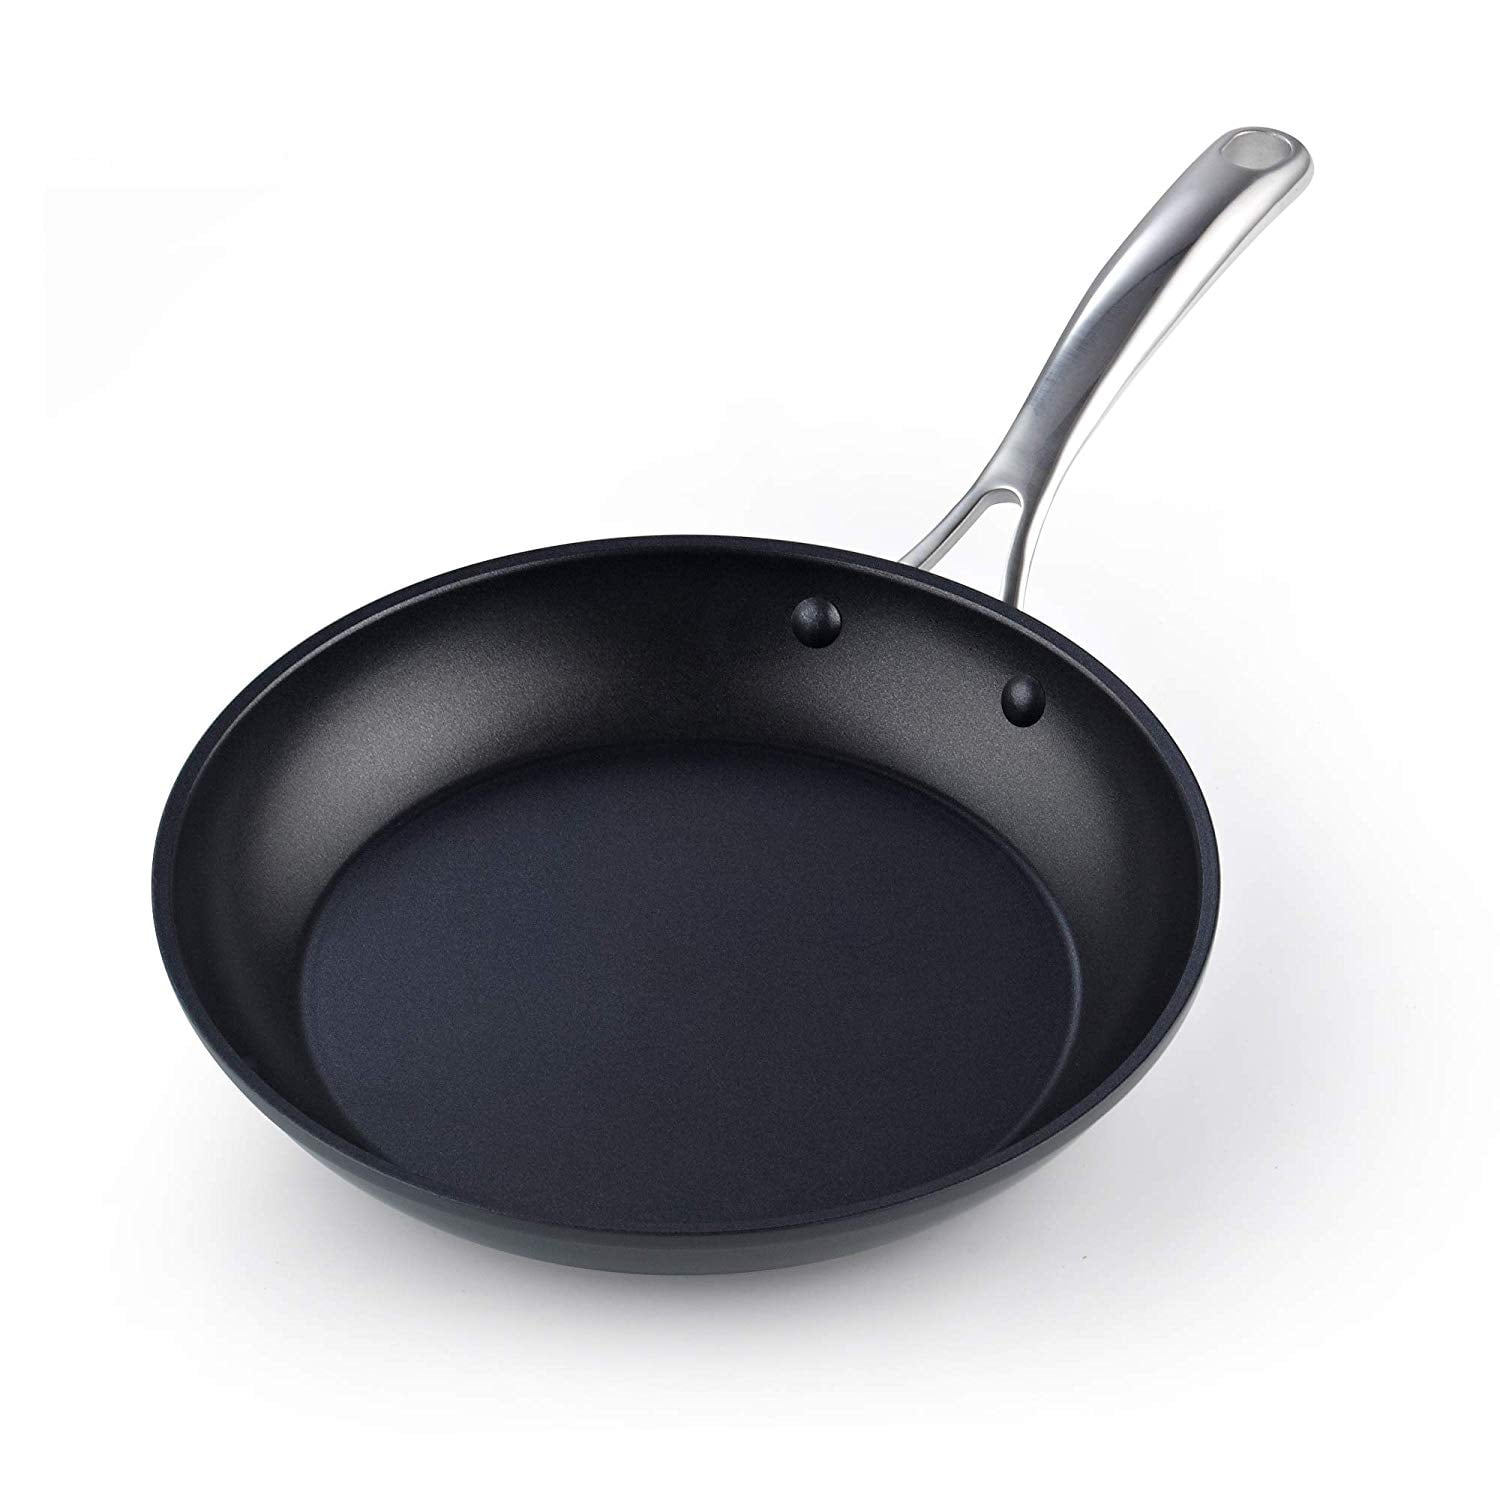 Cooks Standard Frying Omelet Pan, Classic Hard Anodized Nonstick  12-Inch/30cm Saute Skillet Egg Pan, Black